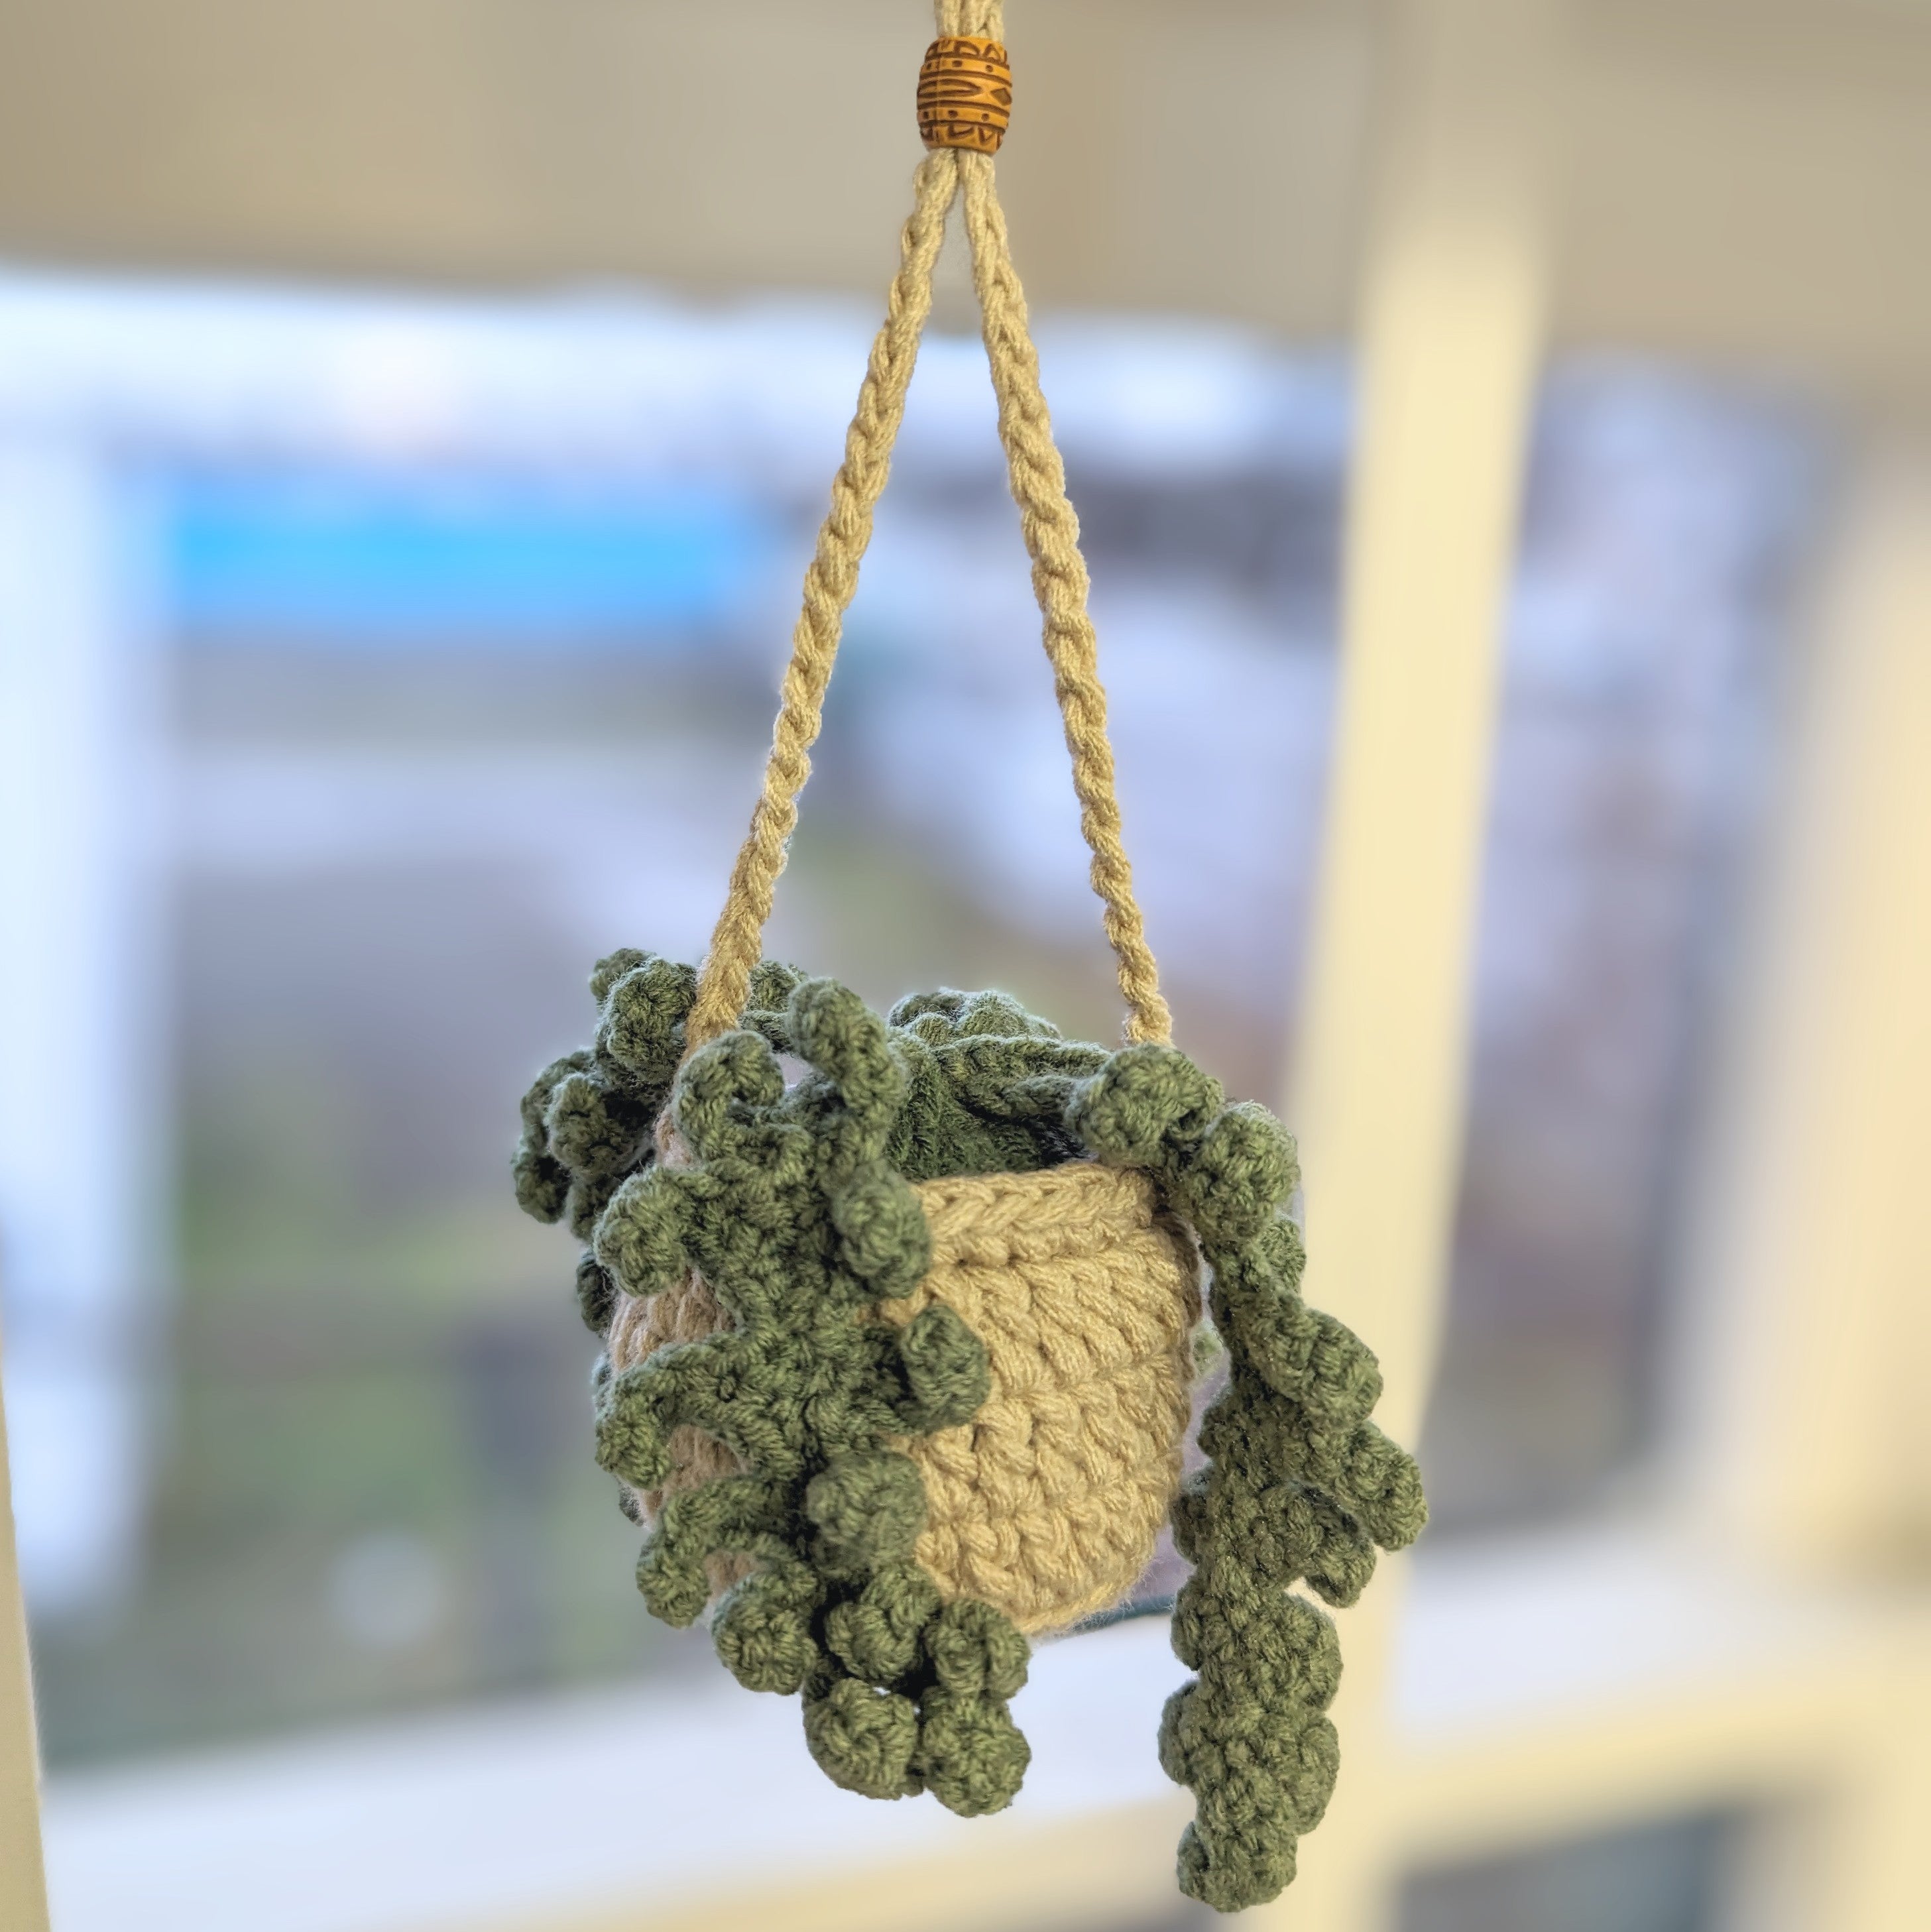 Tomopod Hanging Crochet Car Plant